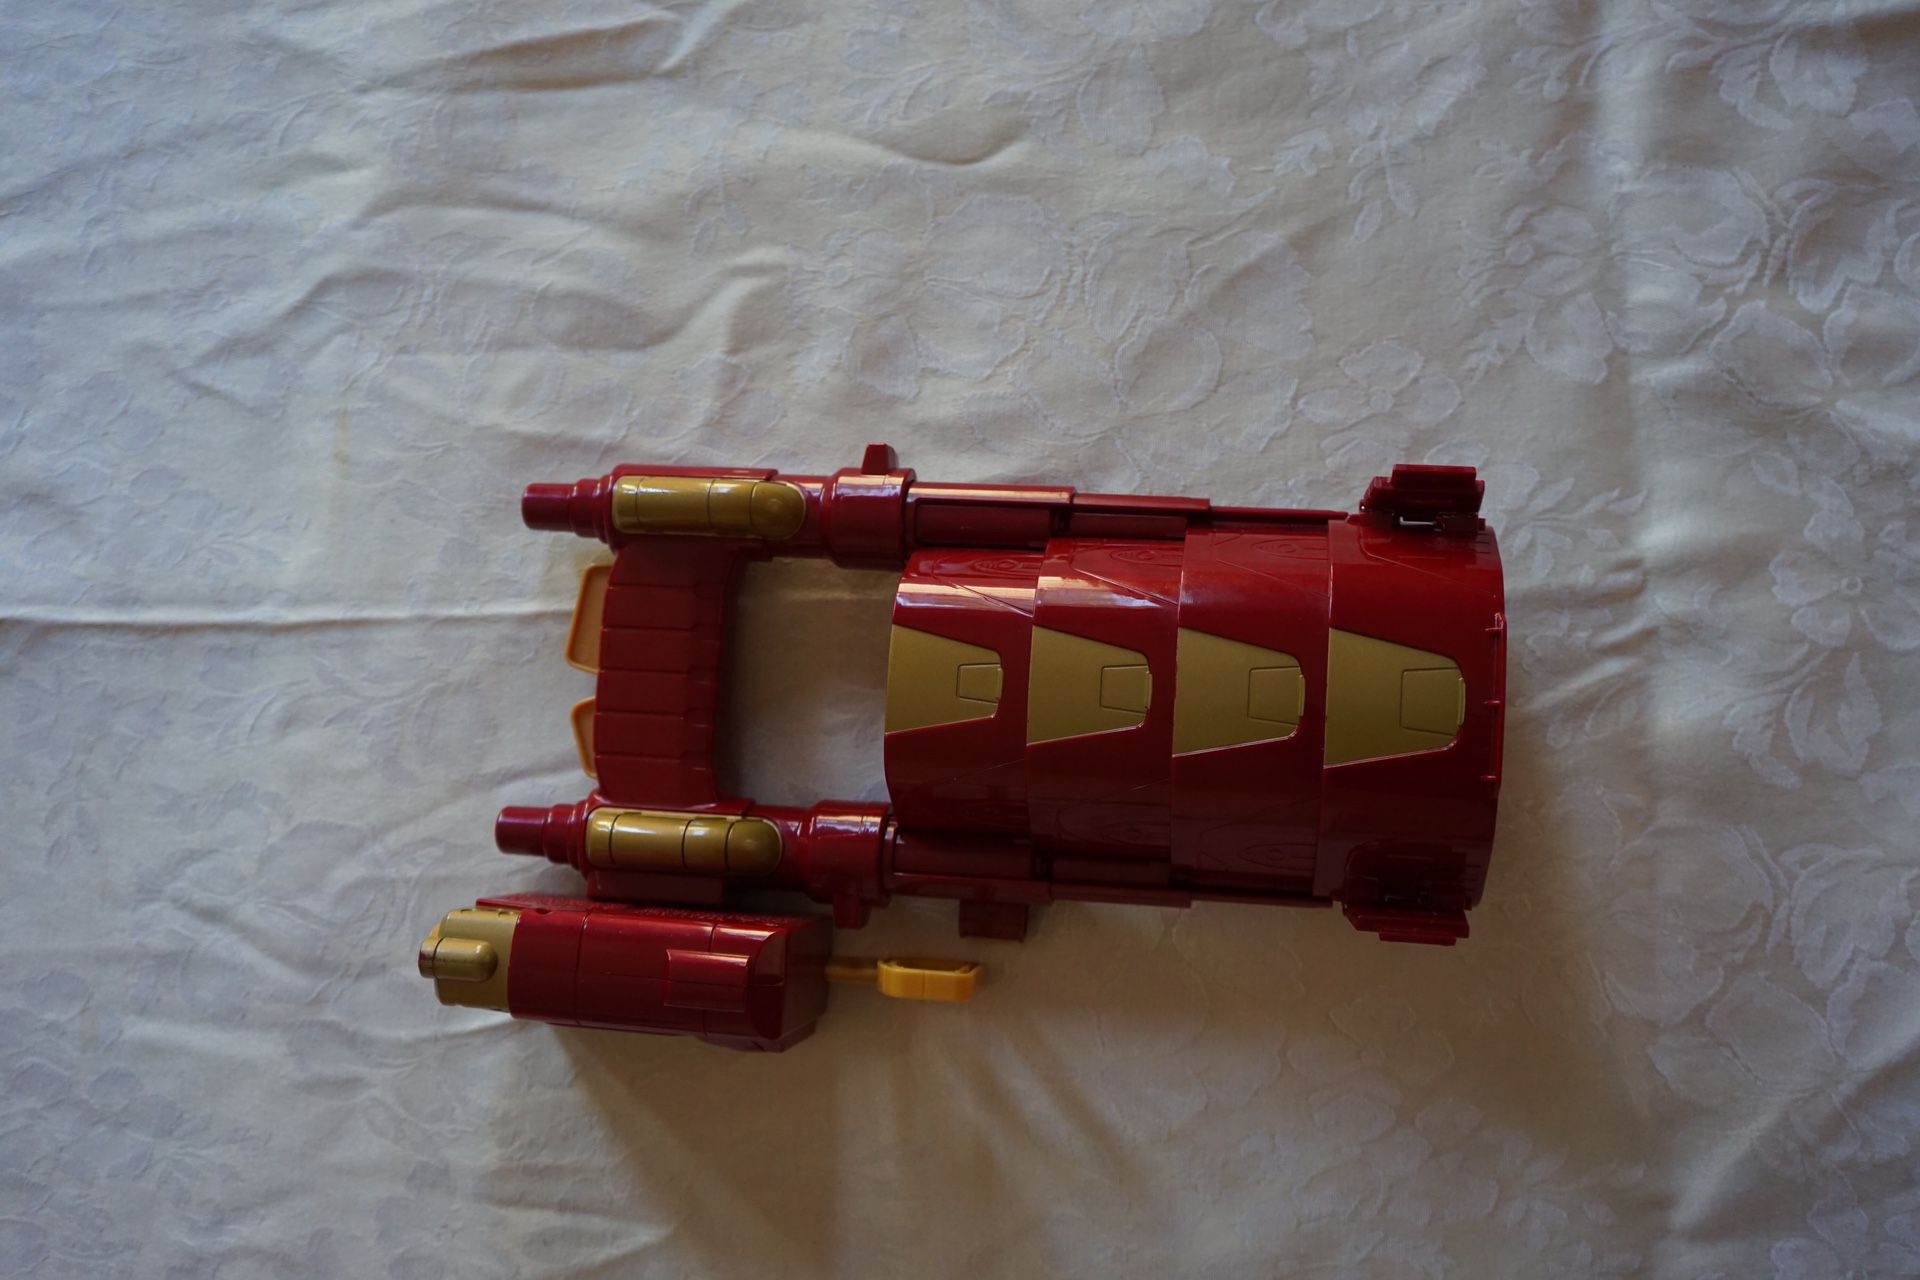 Iron Man Nerf Blaster